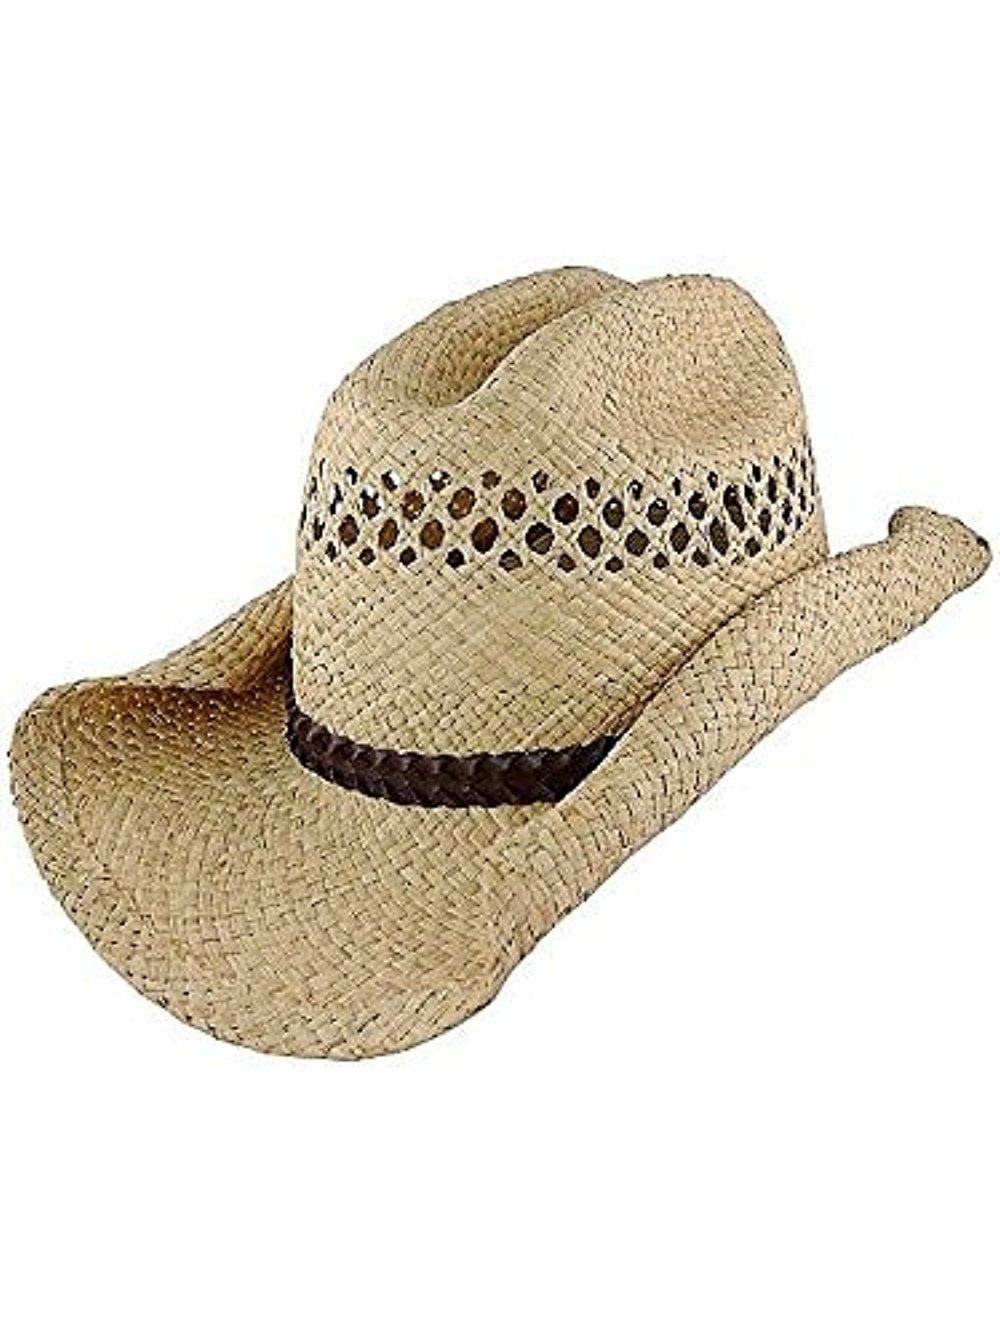 Toddler Rolled Brim Cowboy Hat